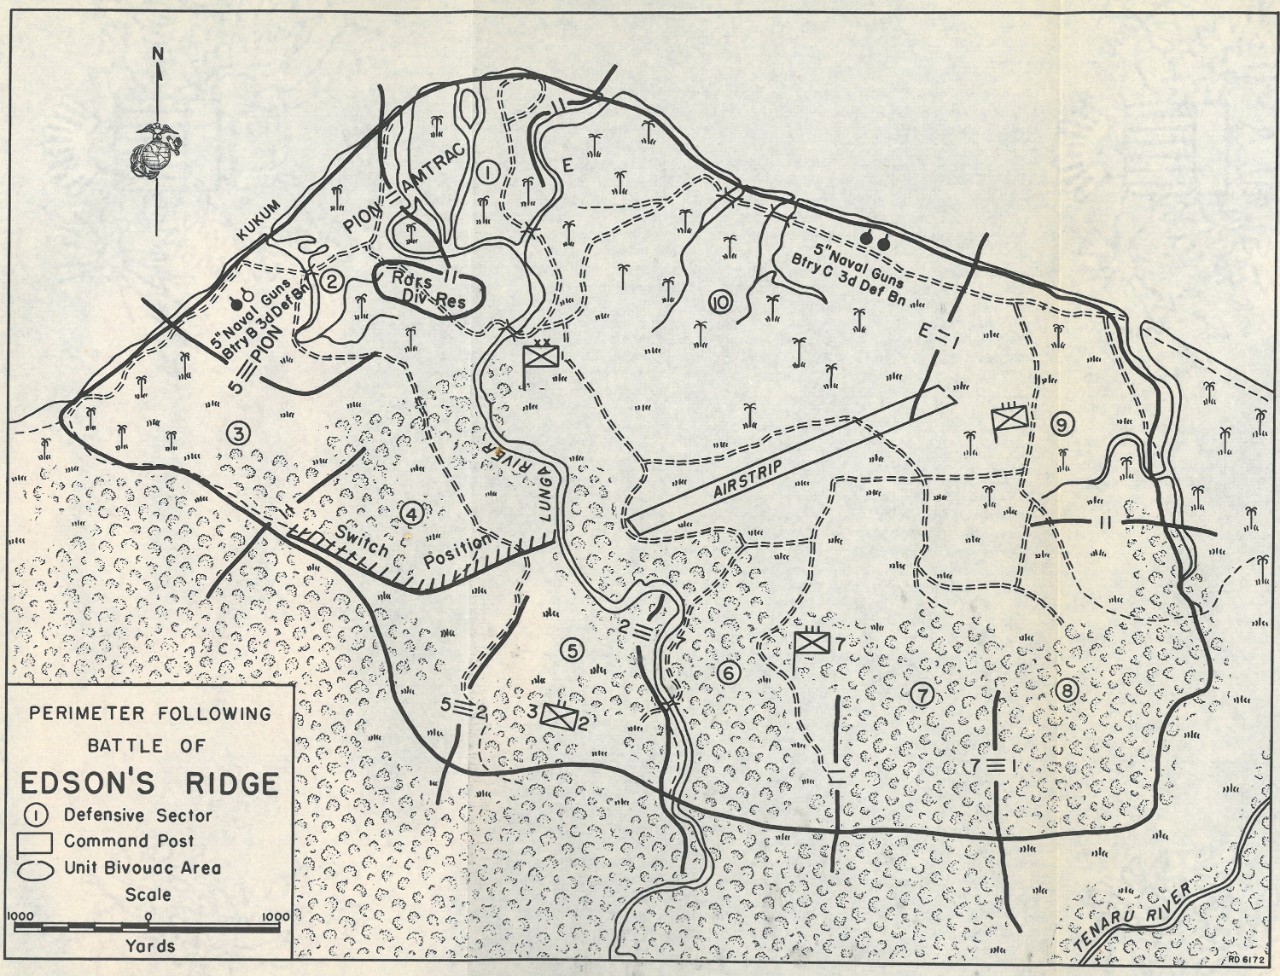 Map 10: Perimeter Following Battle of Edson's Ridge.